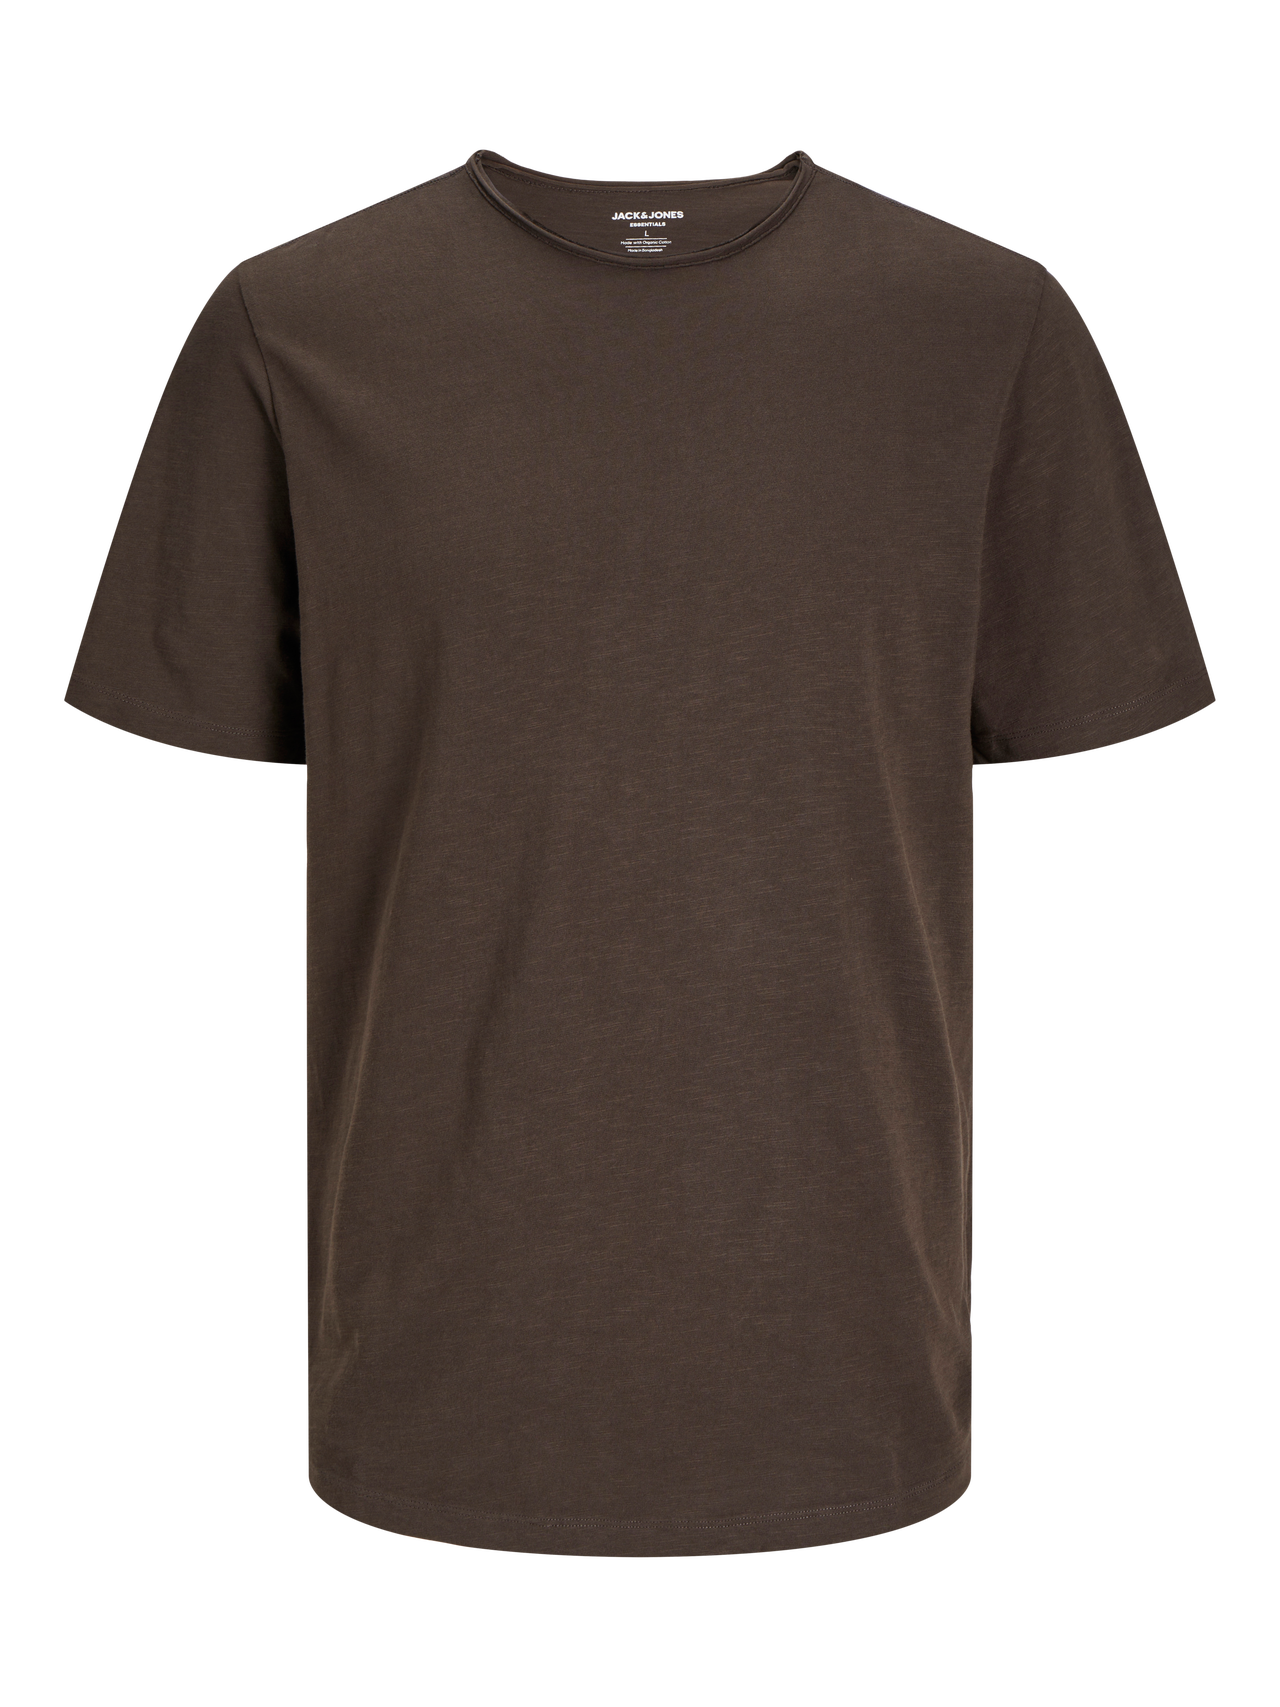 Jack & Jones Plain Crew neck T-shirt -Mulch - 12182498